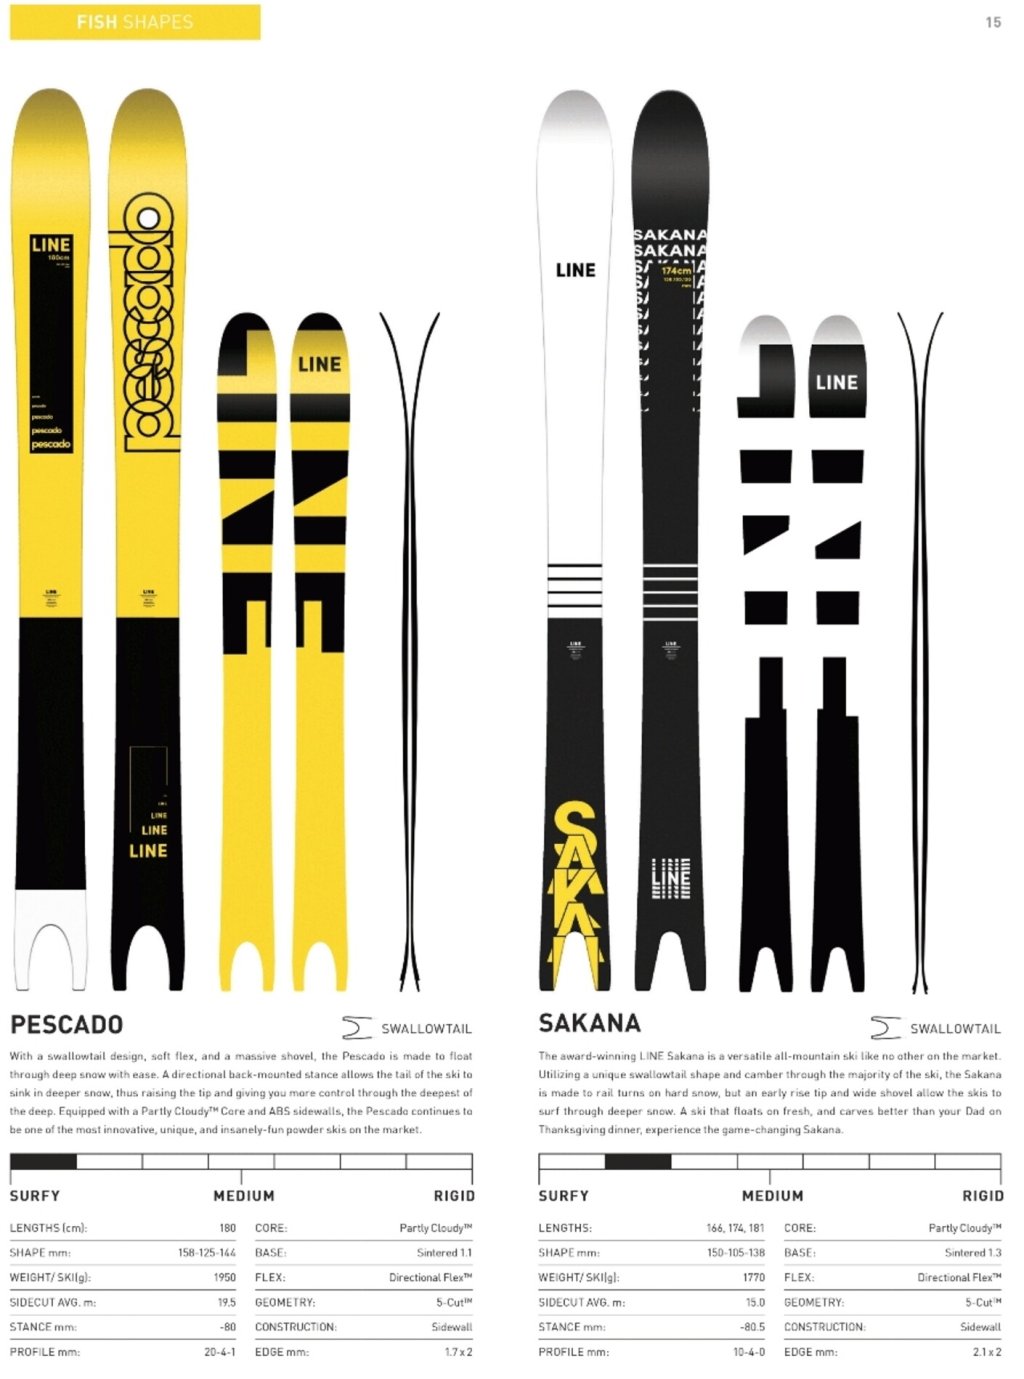 Line Fishtail Skis